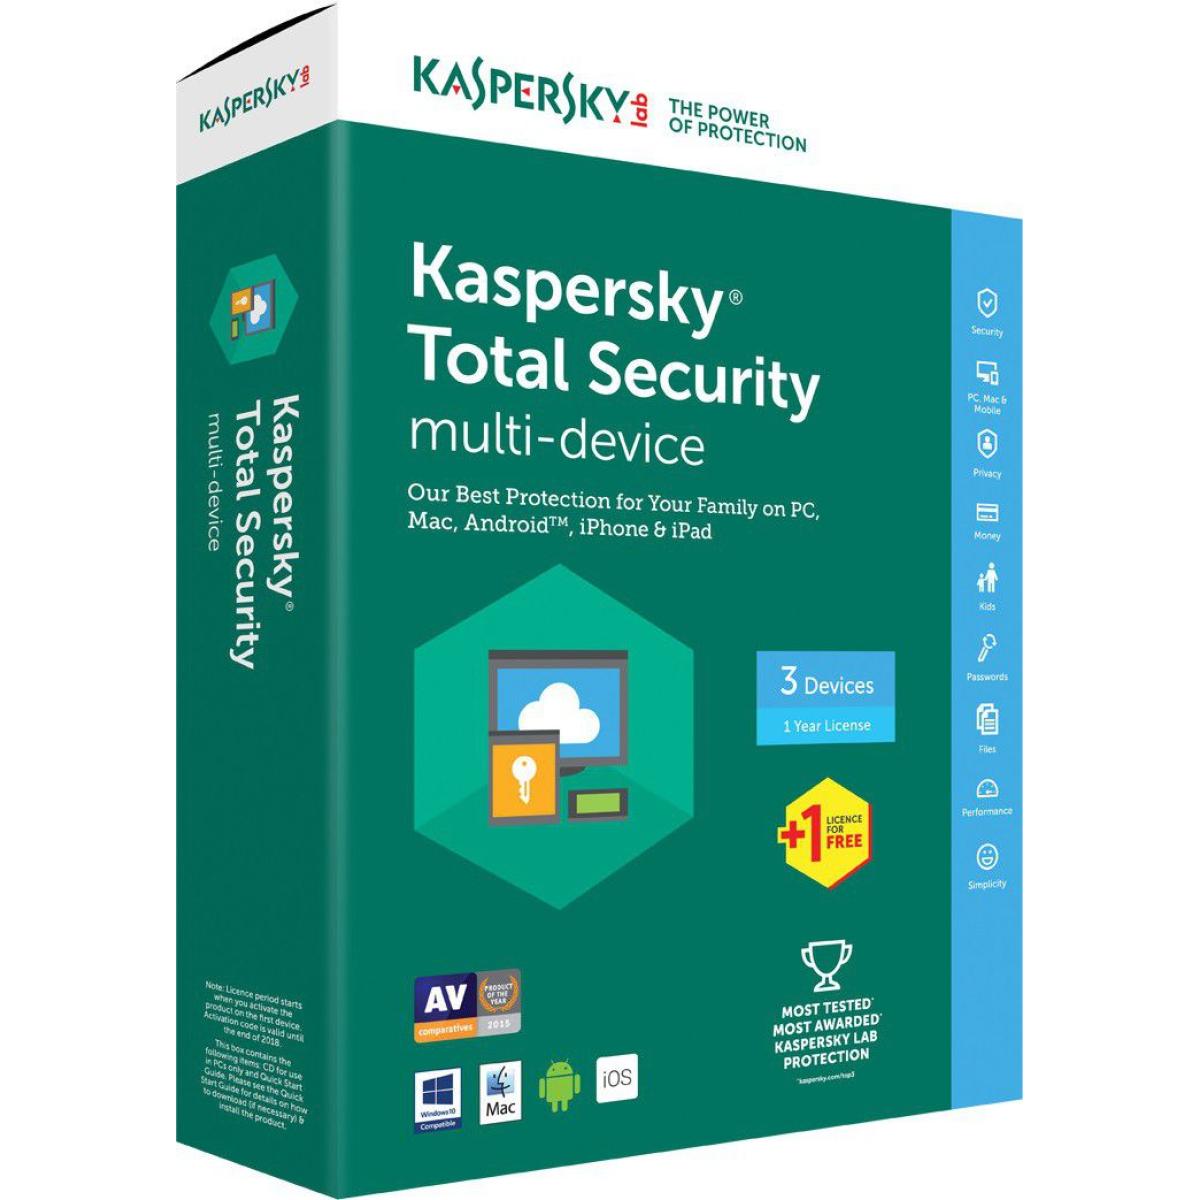 kaspersky total security